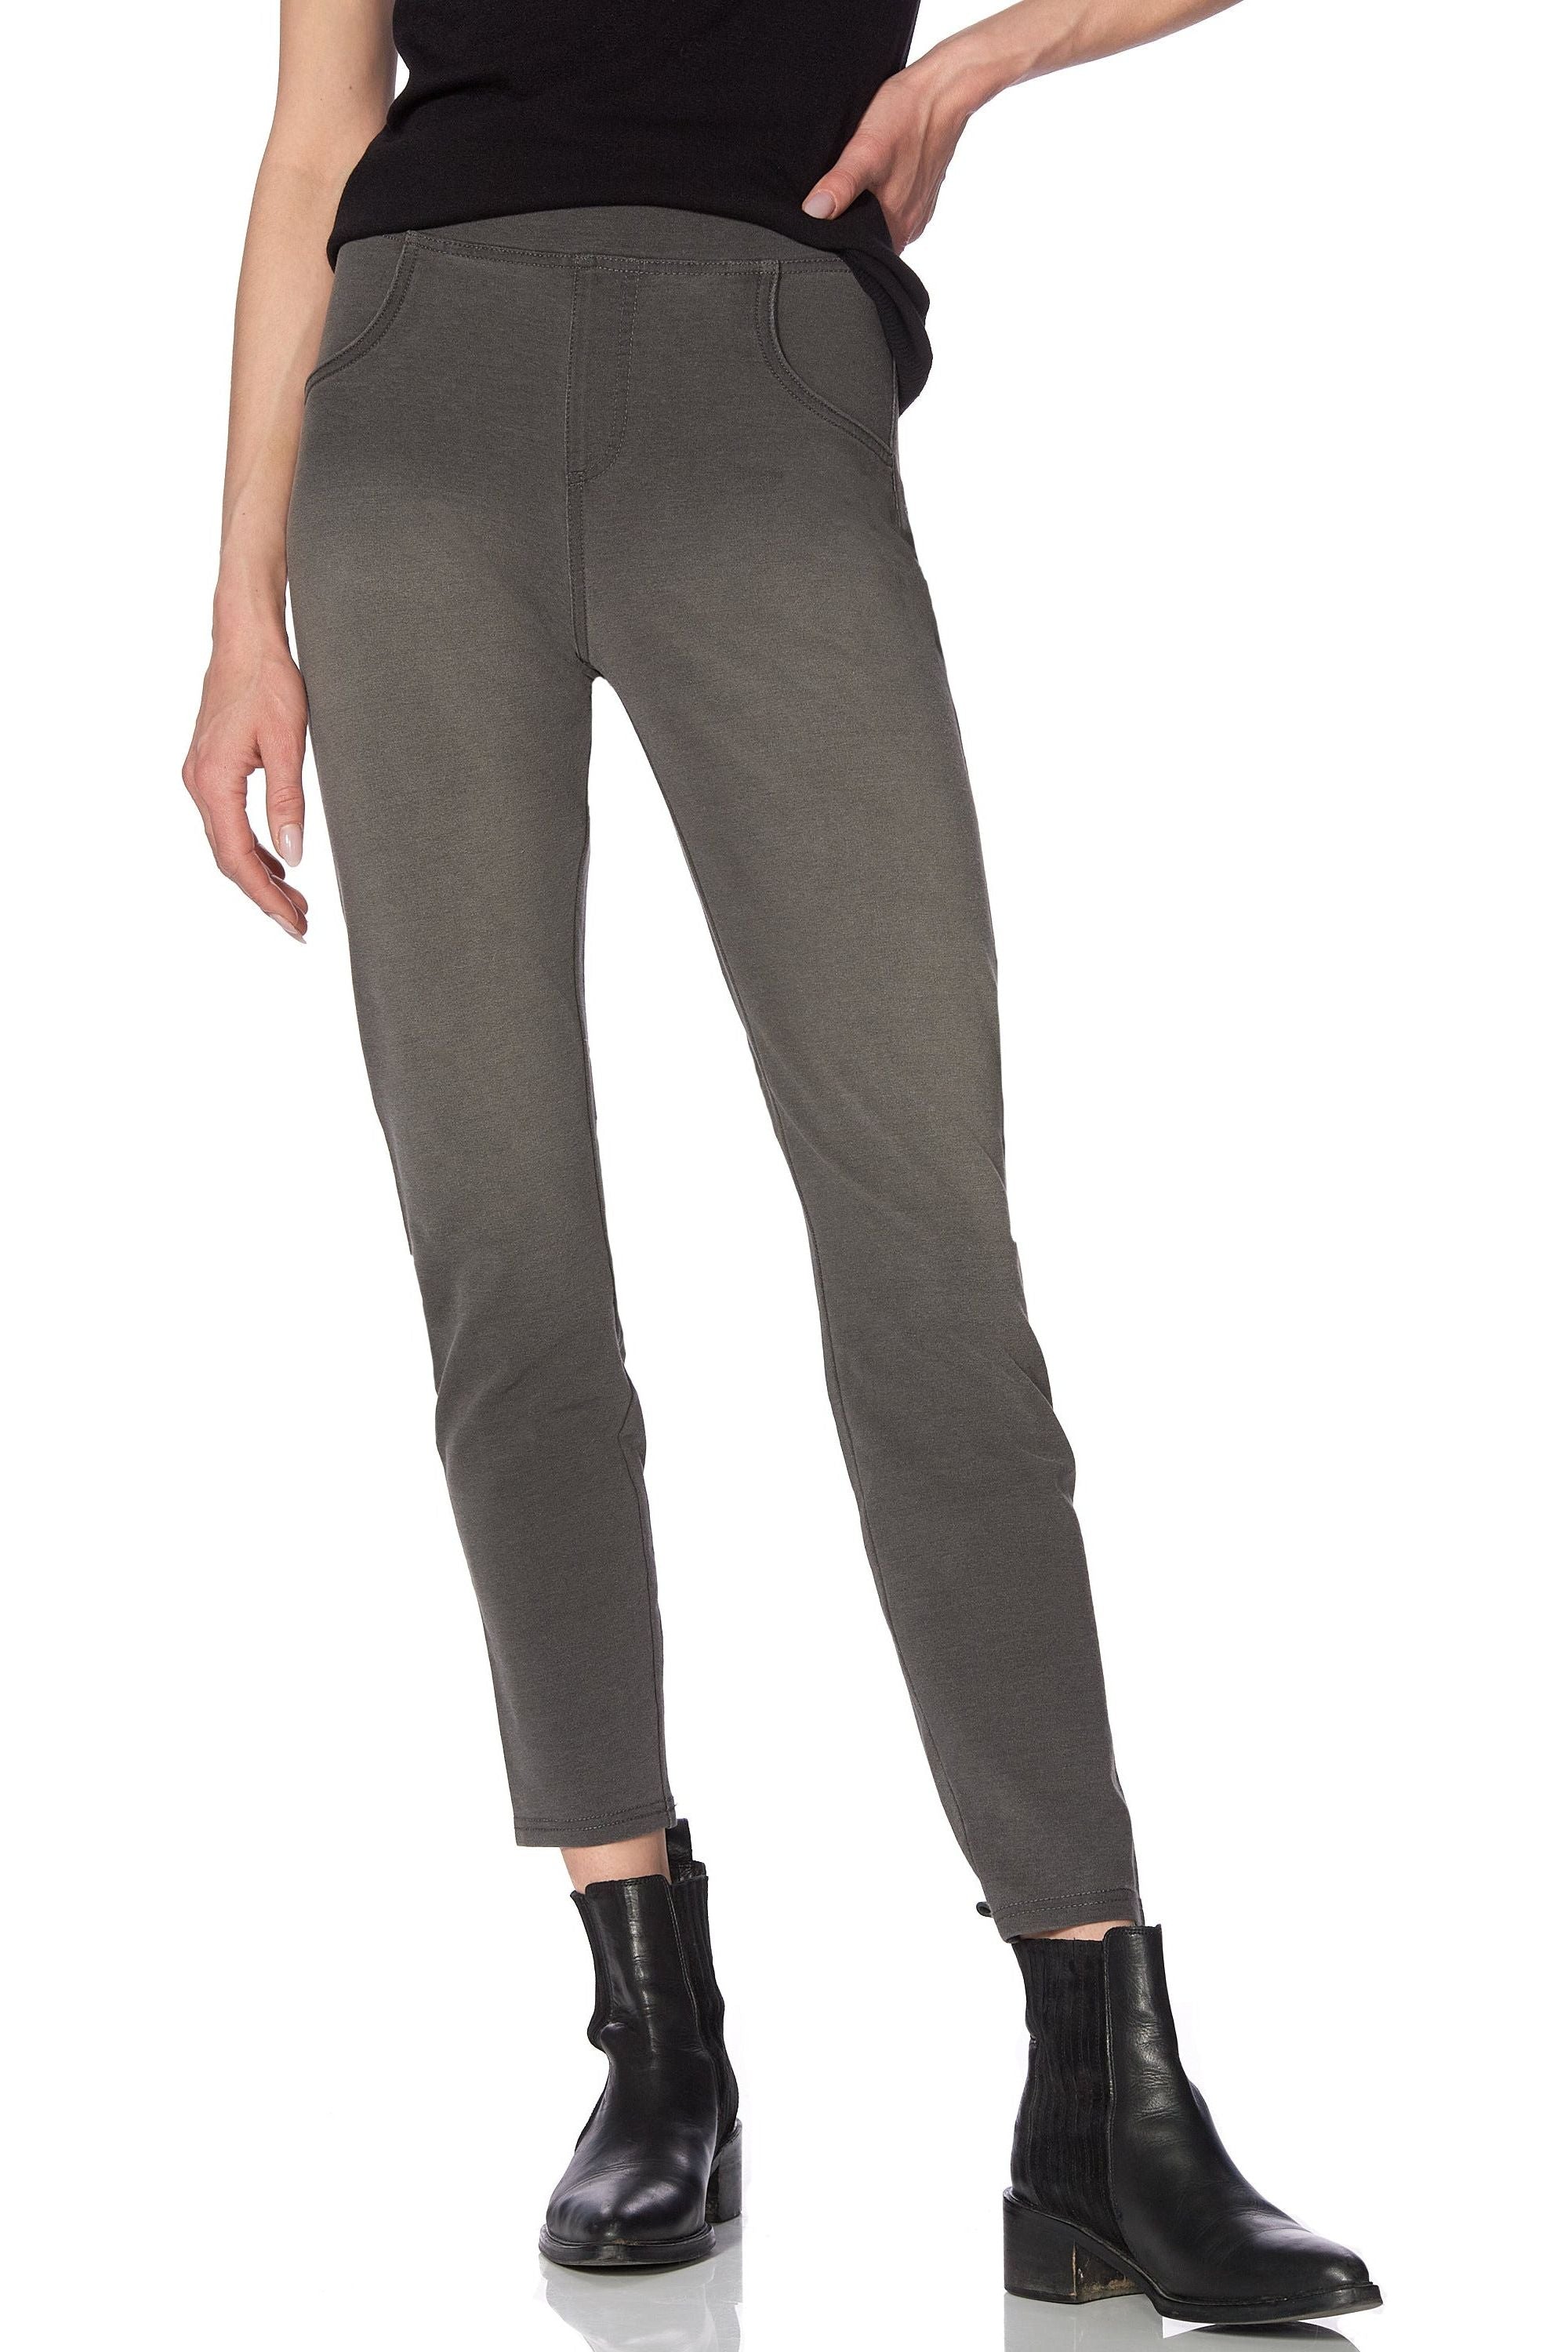 HUE Super Soft Stretch Denim Leggings - Style 22818, front, grey